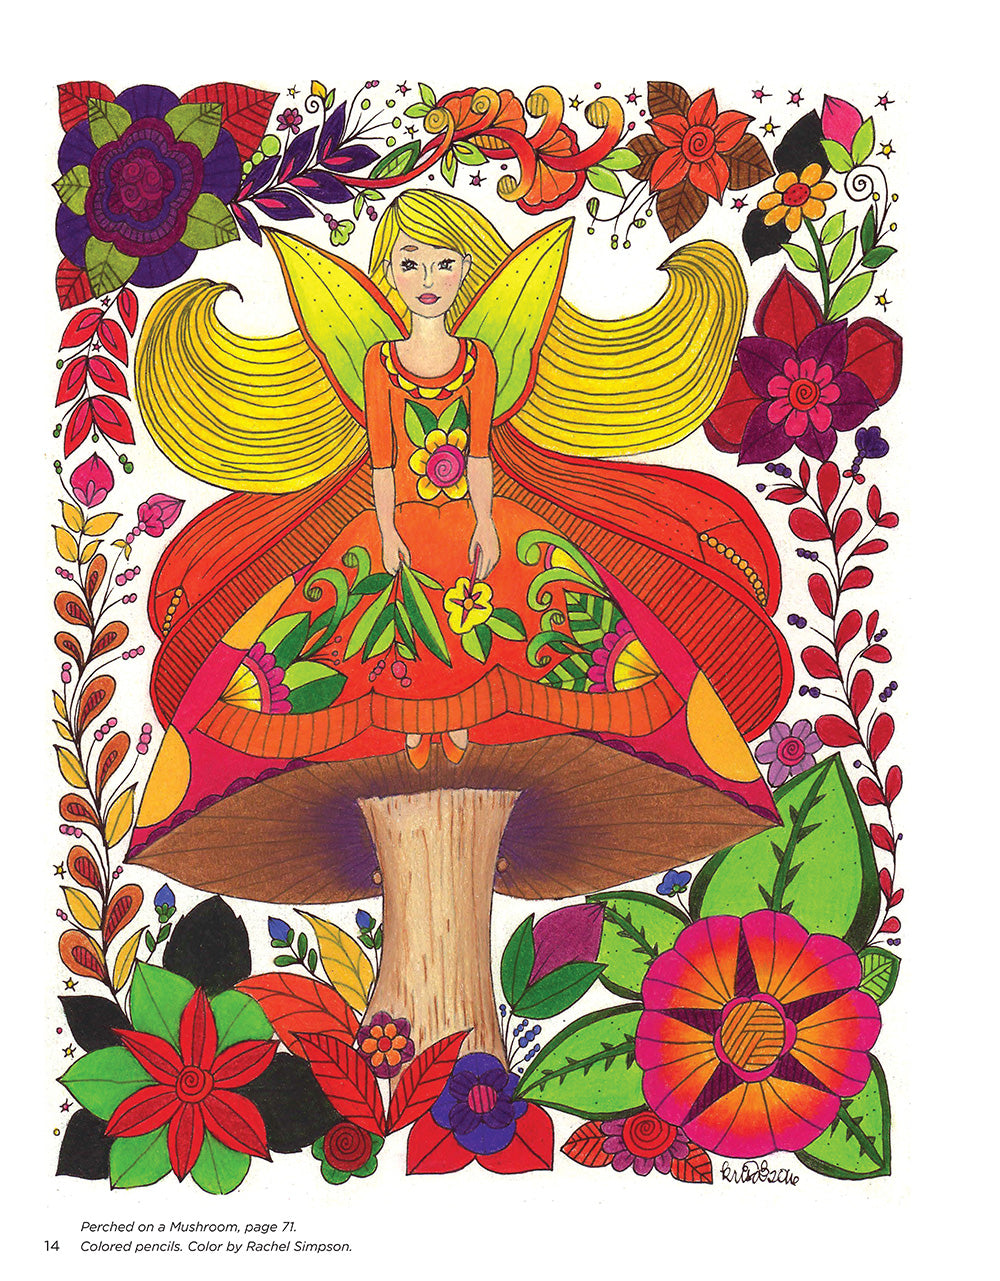 KC Doodle Art Fairies Coloring Book